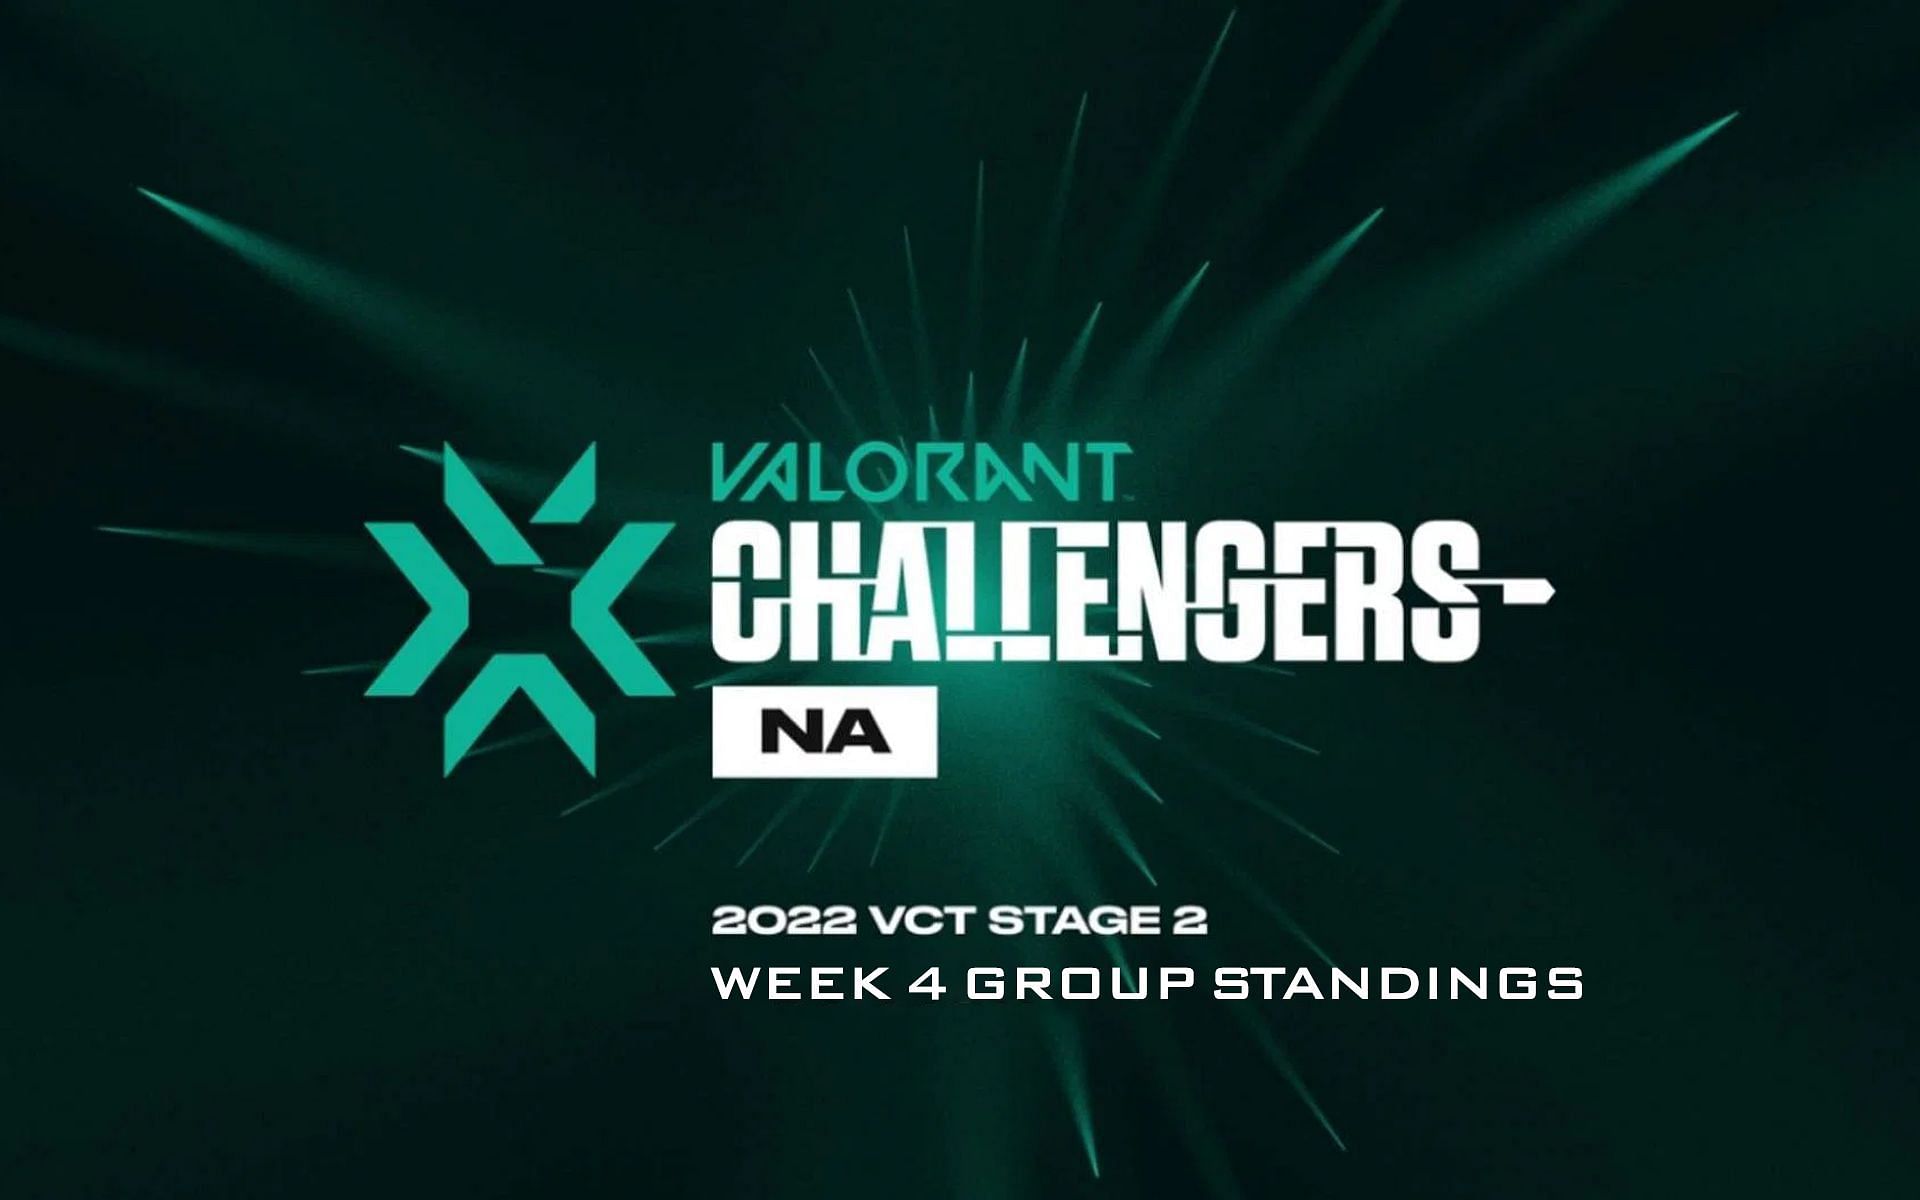 VCT NA Stage 2 Challengers group standings after Week 4 (Image via Sportskeeda)